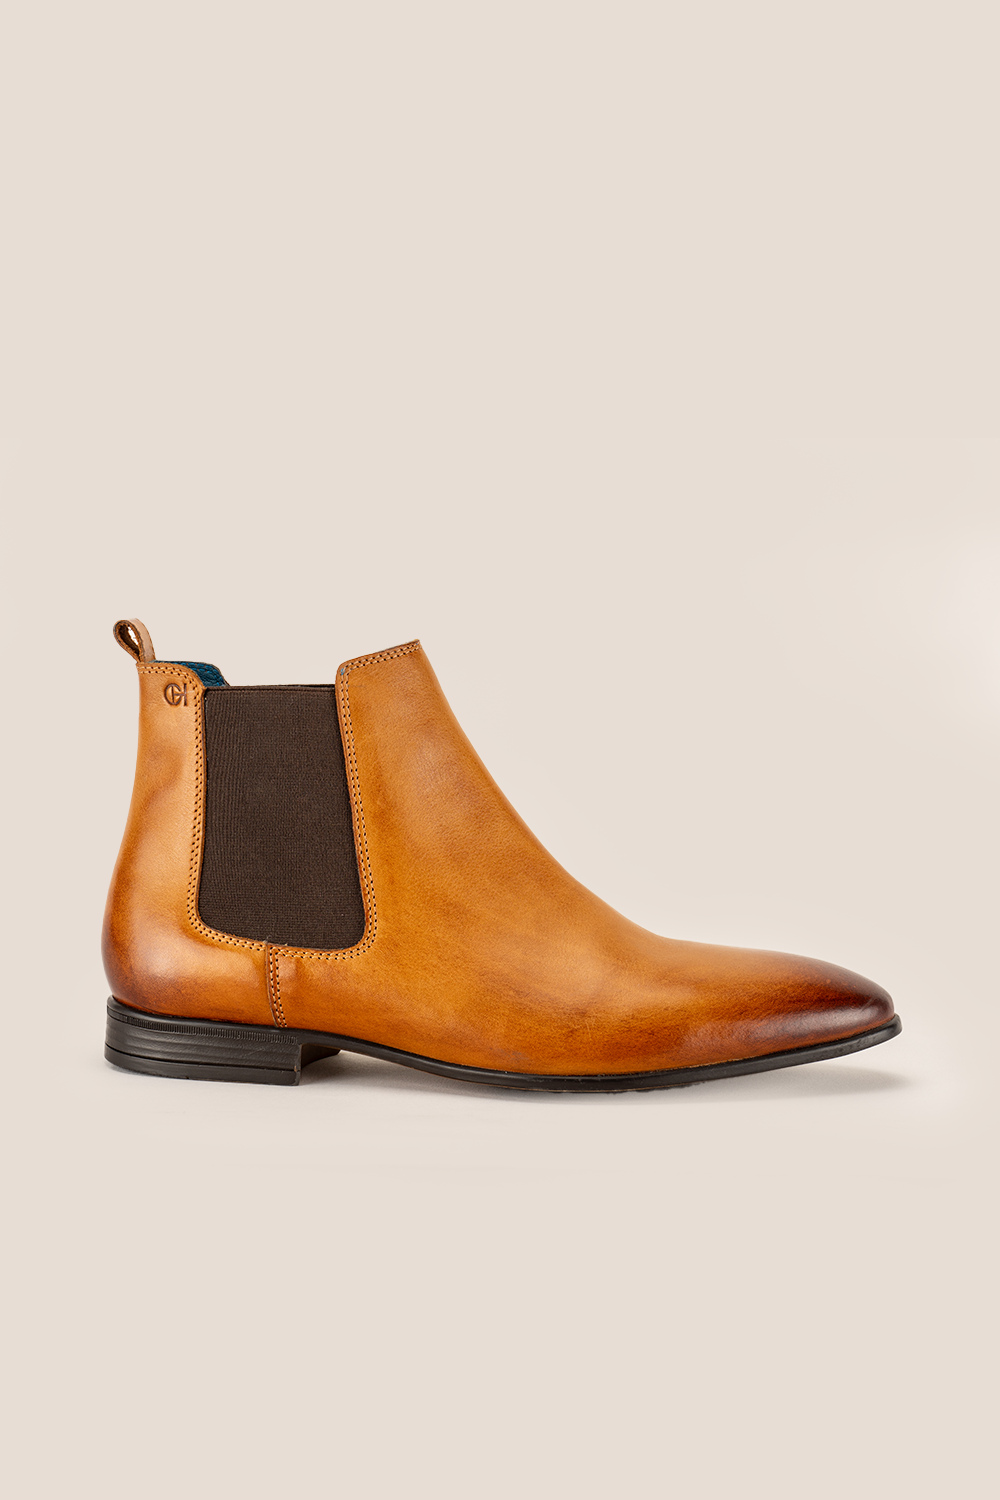 Oswin Hyde Darwin Tan boots for Men